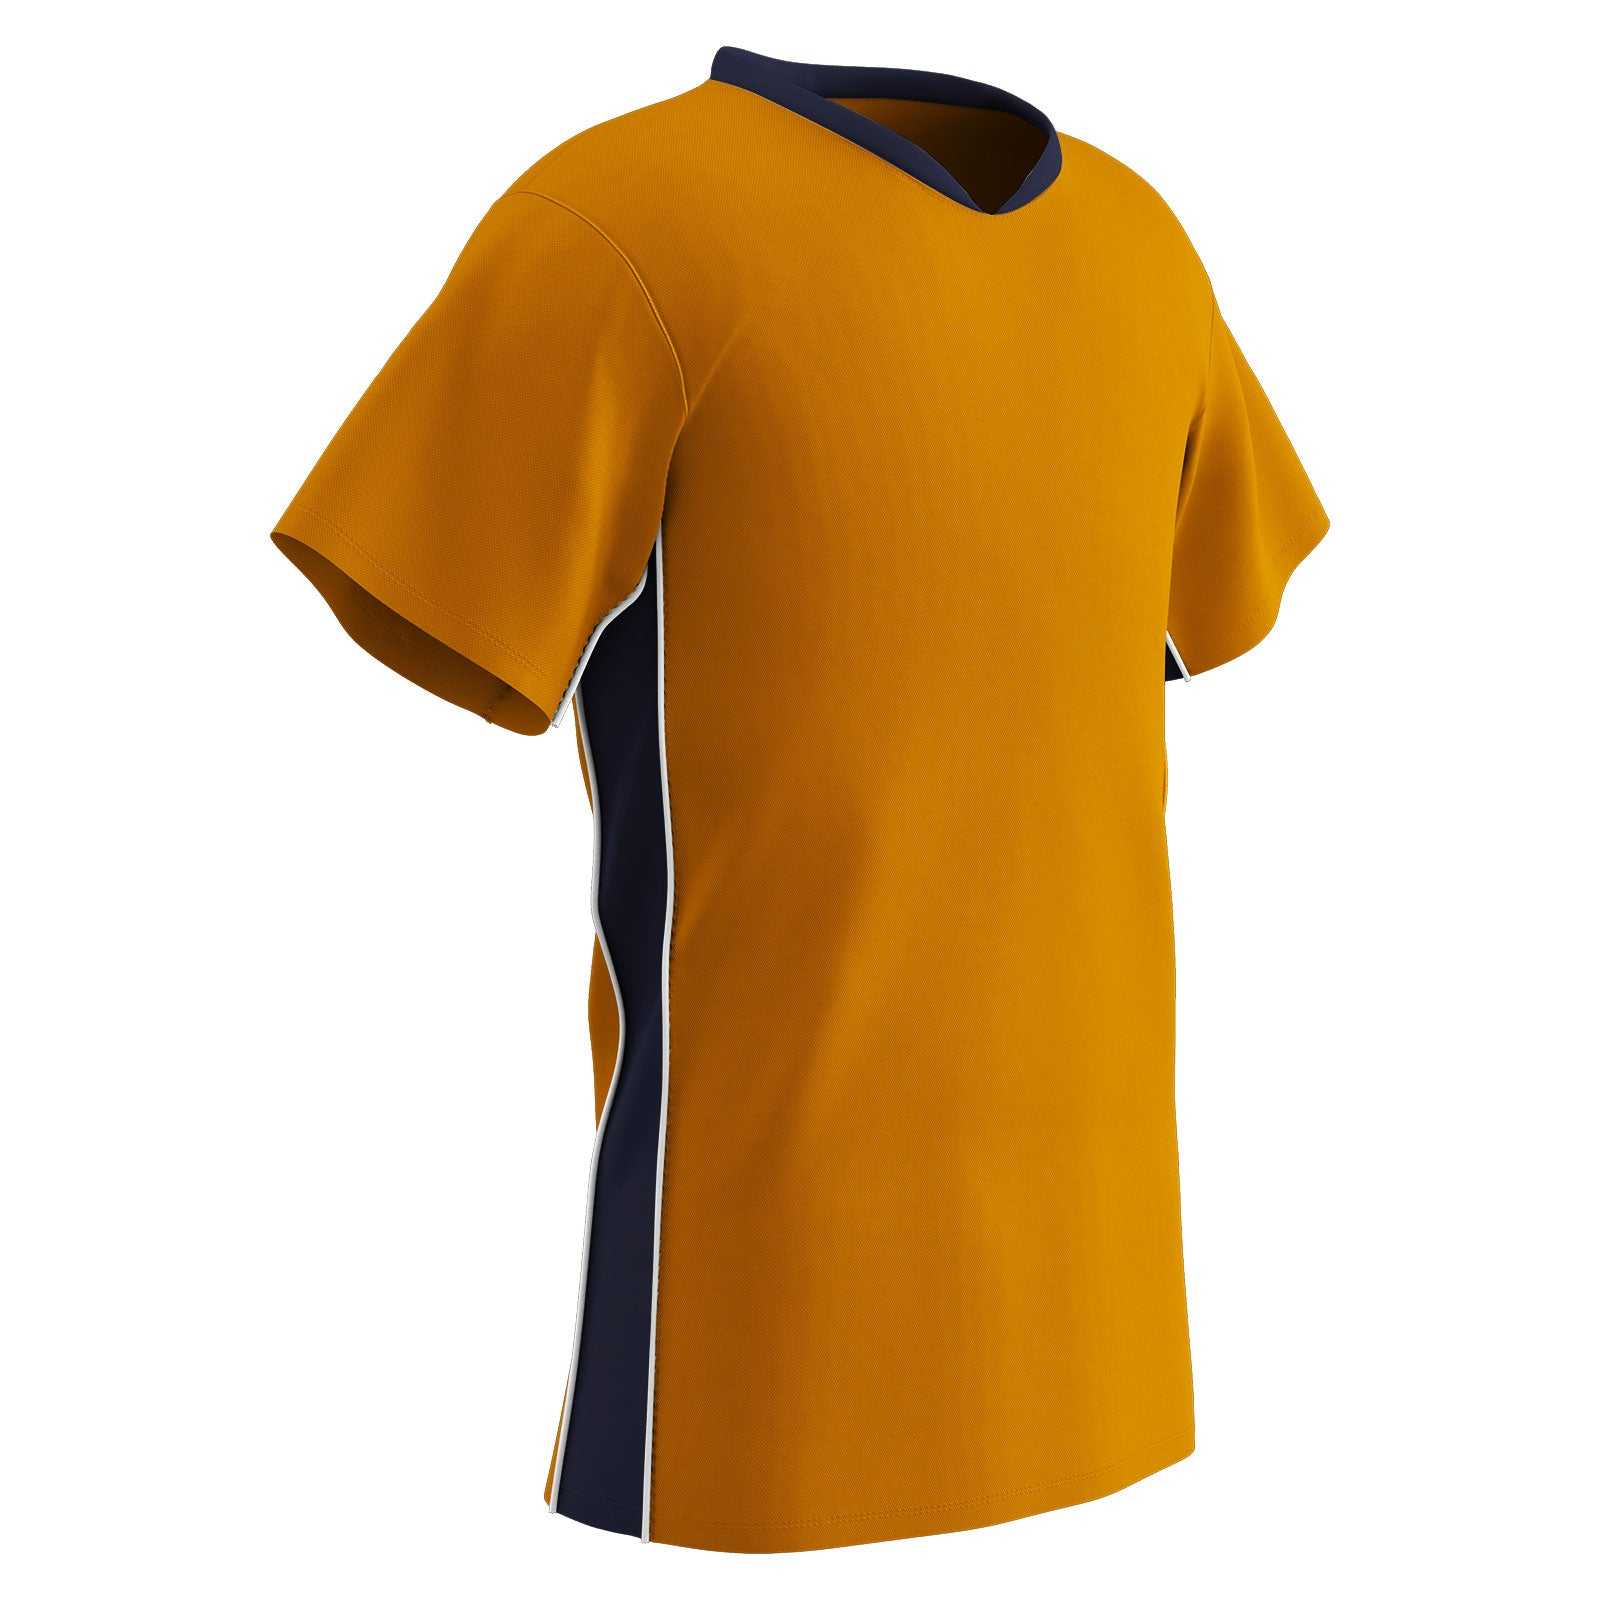 Champro SJ10 Header Soccer Jersey - Neon Orange Navy White - HIT a Double